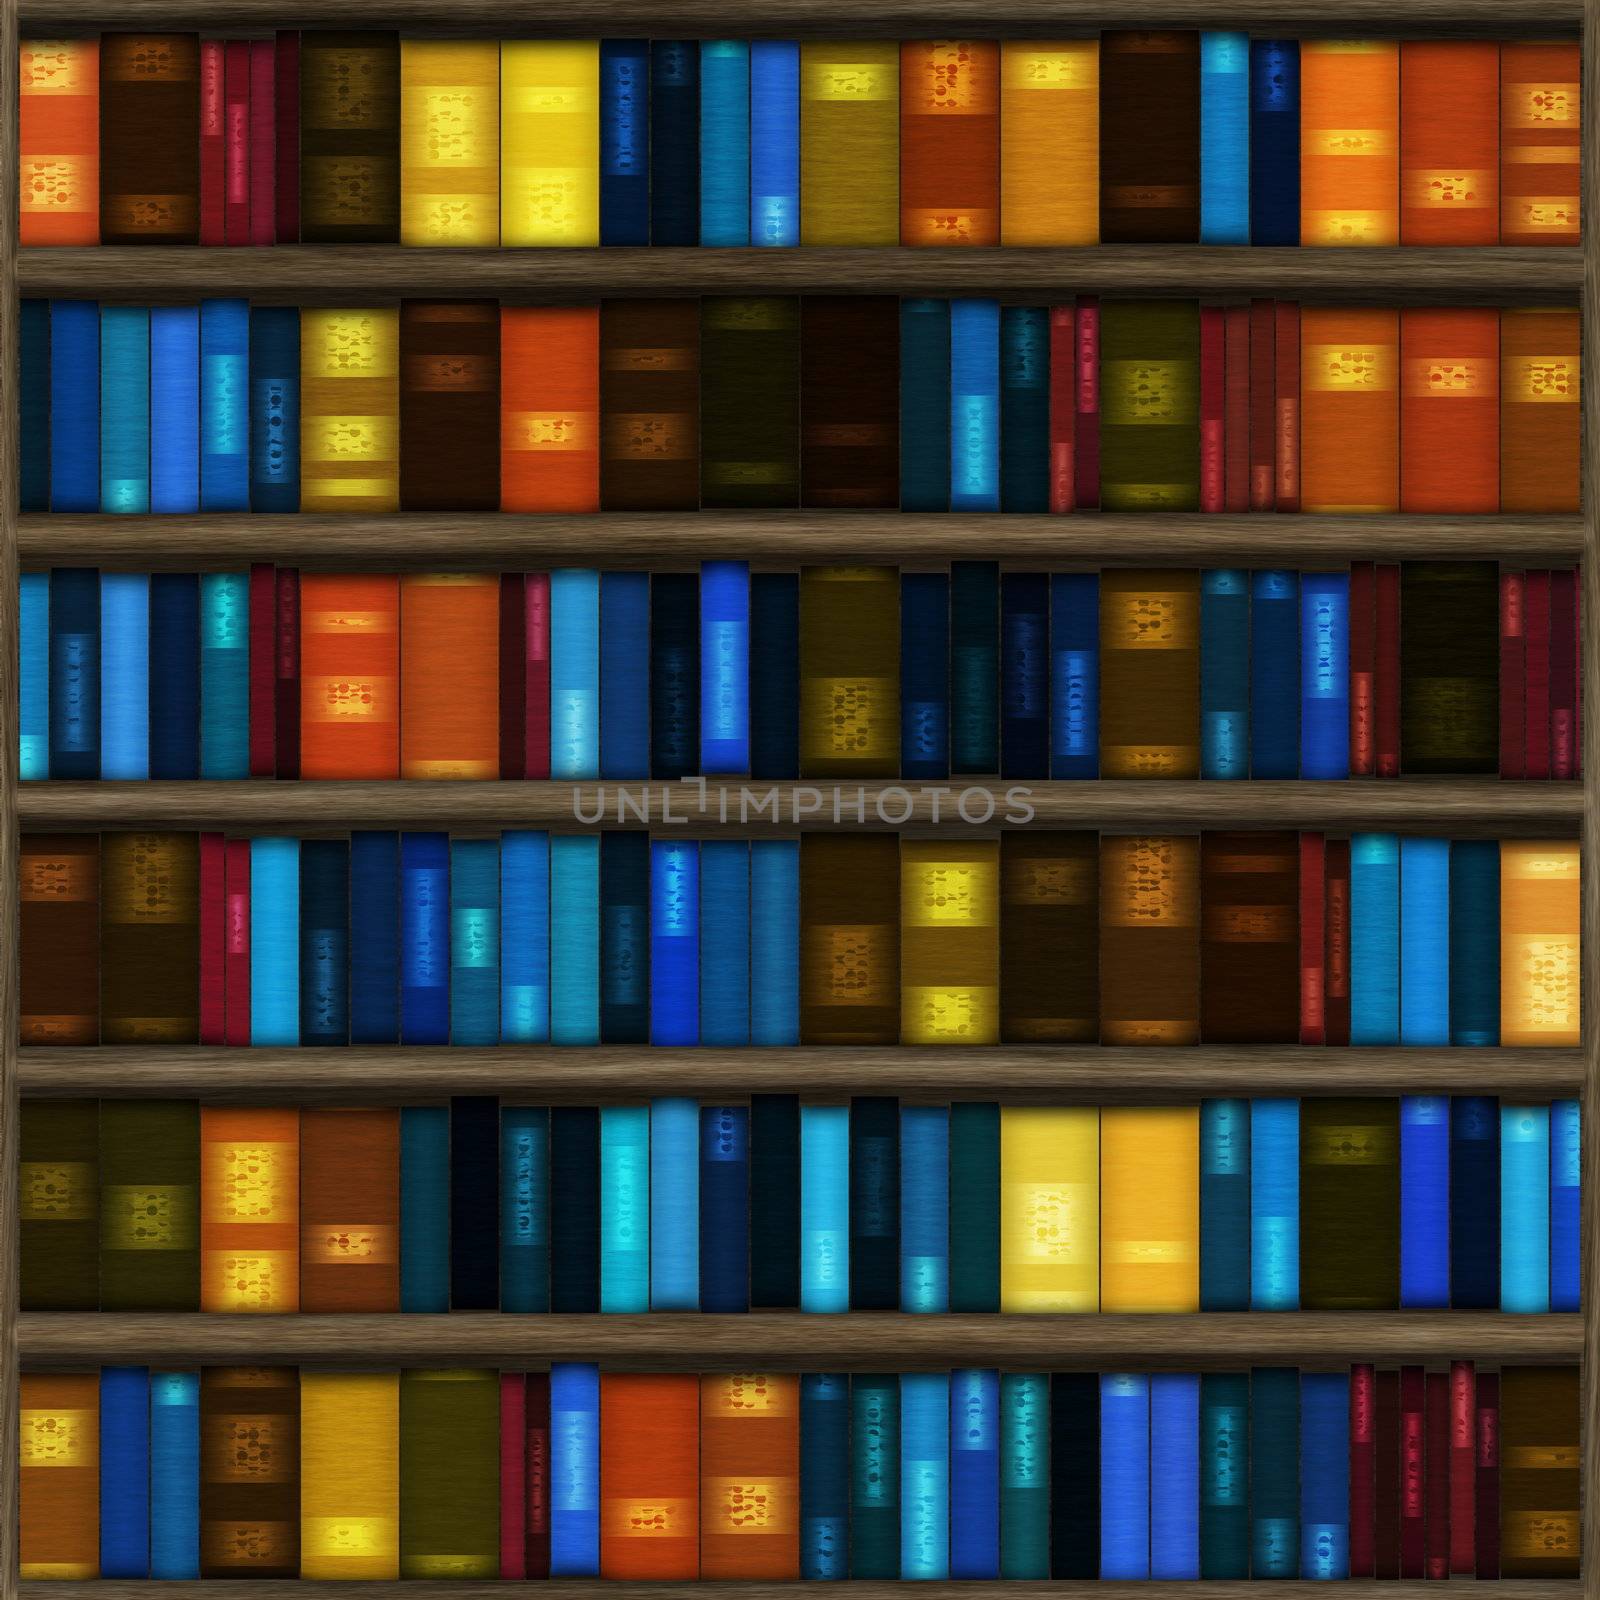 Seamless Book Shelf Texture as a Background